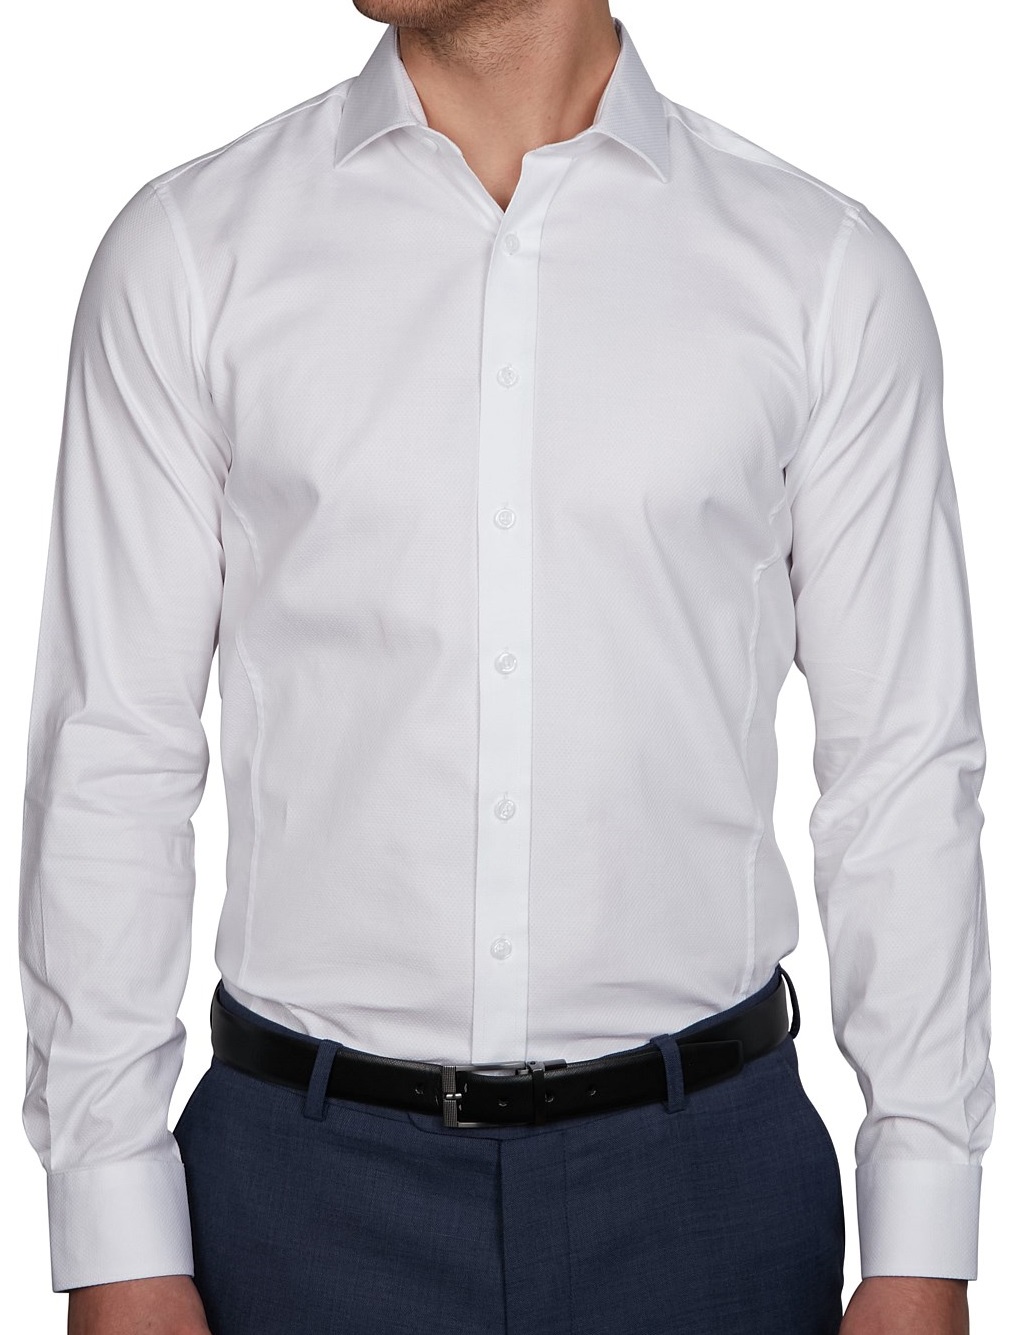 Geoffrey Beene Shirts Body Fit Waffle Weave White. Buy Online